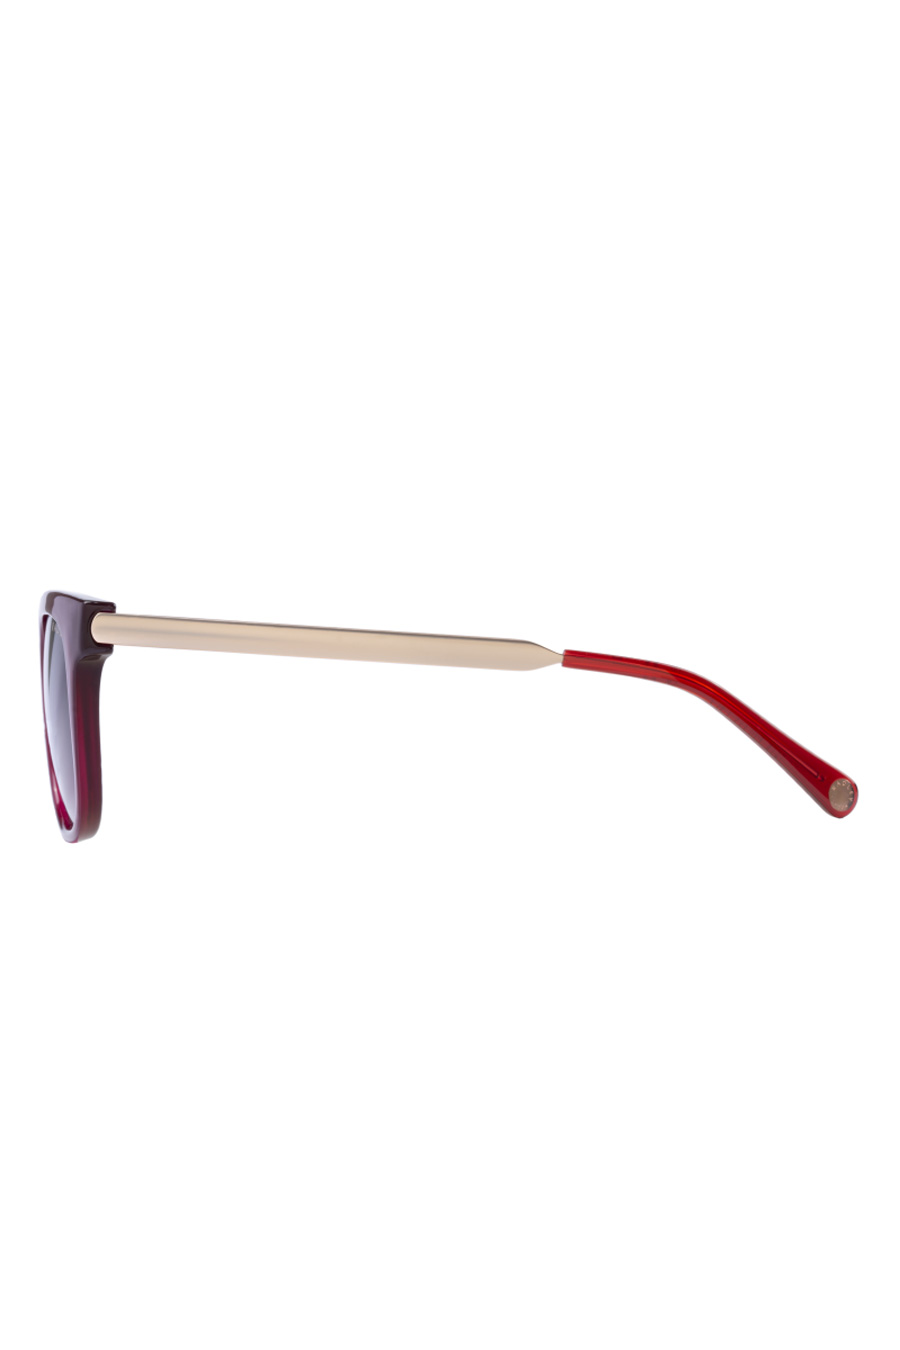 Sunglasses RADLEY RDS-6510-172